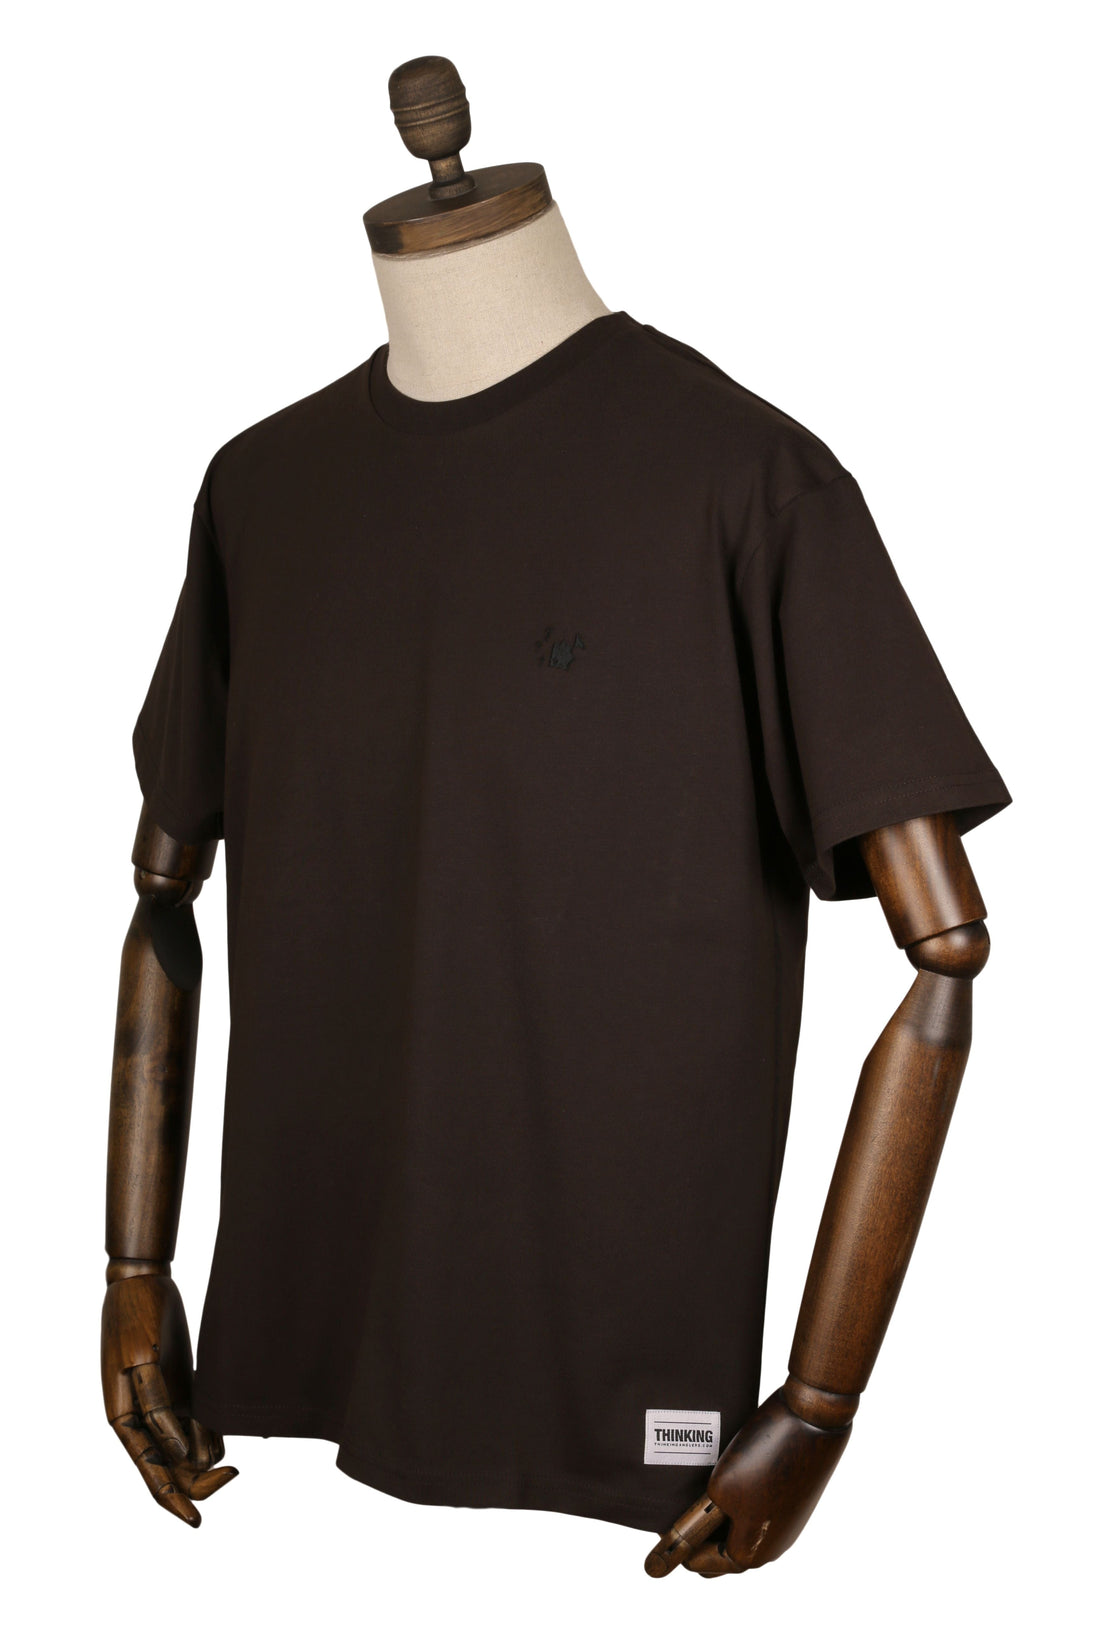 Thinking Anglers T-Shirt Brown Medium